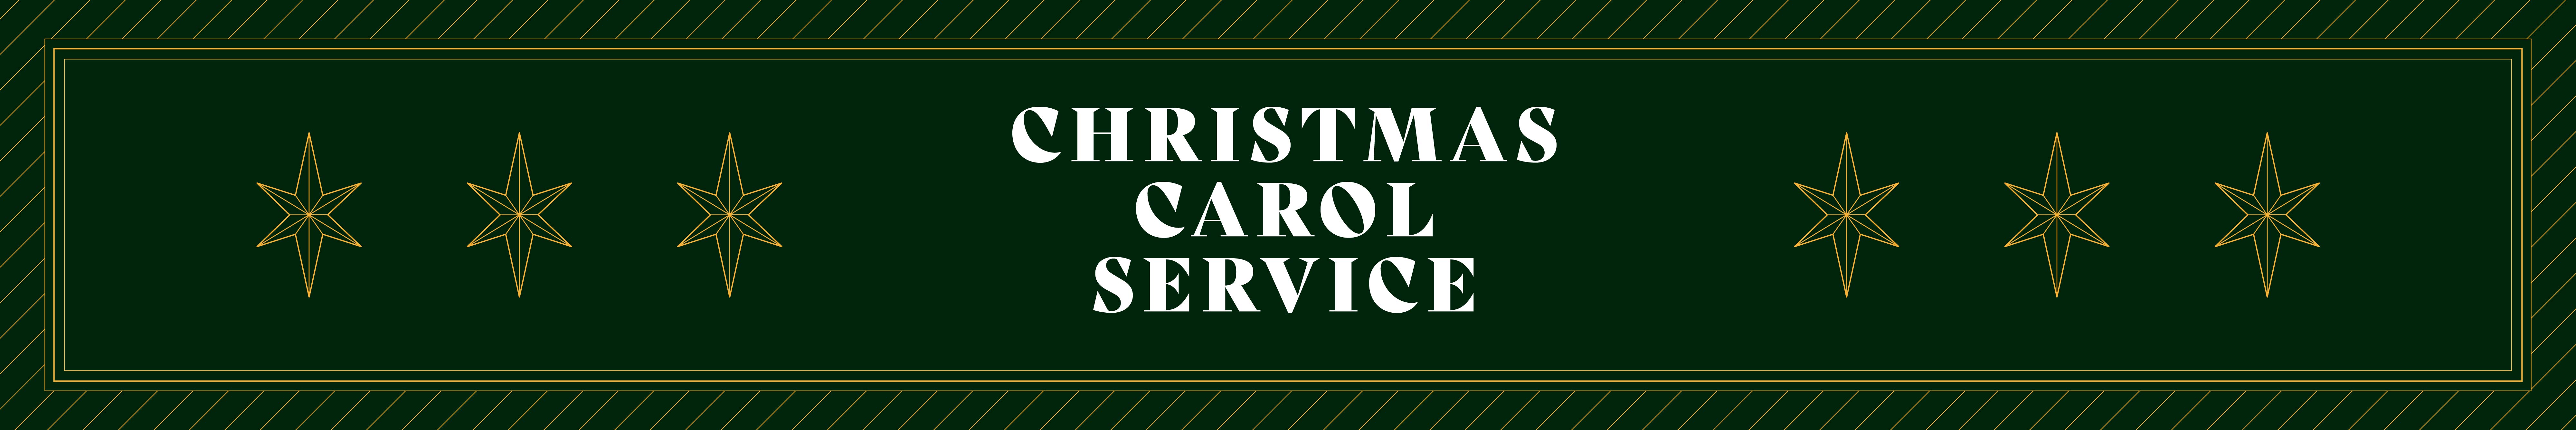 Christmas Carols Website 22